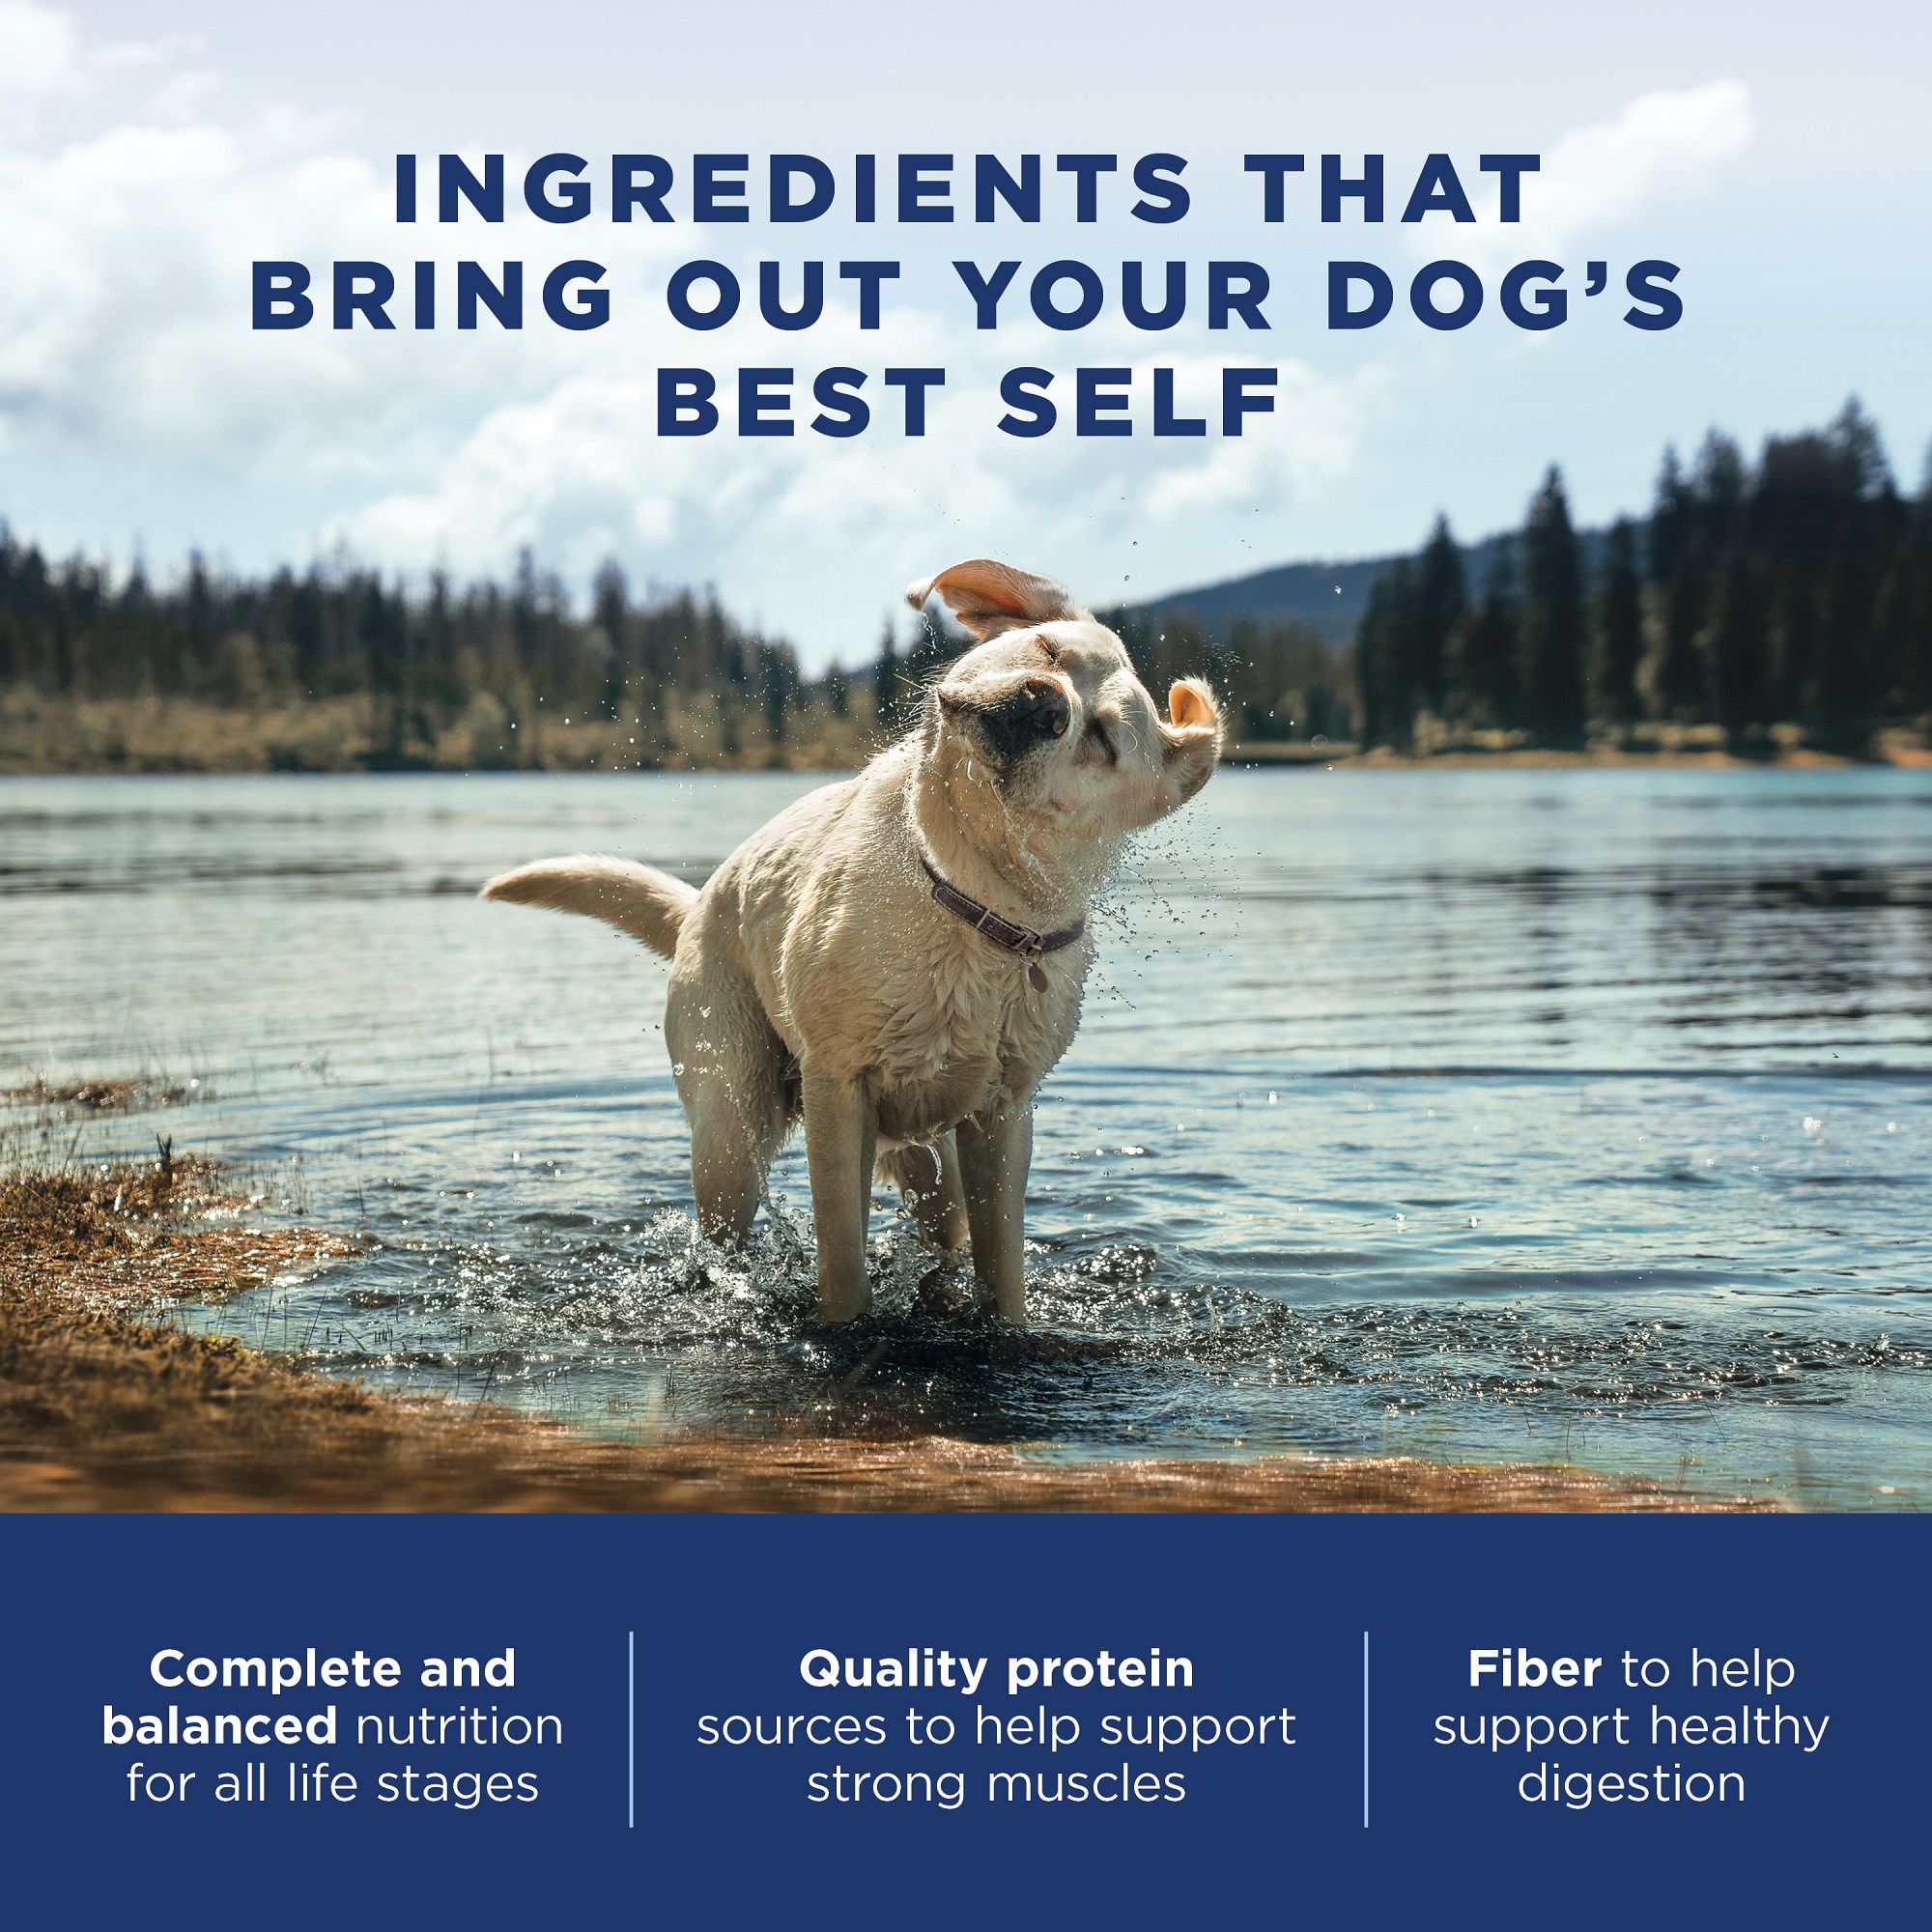 natural balance original ultra whole body health dog food